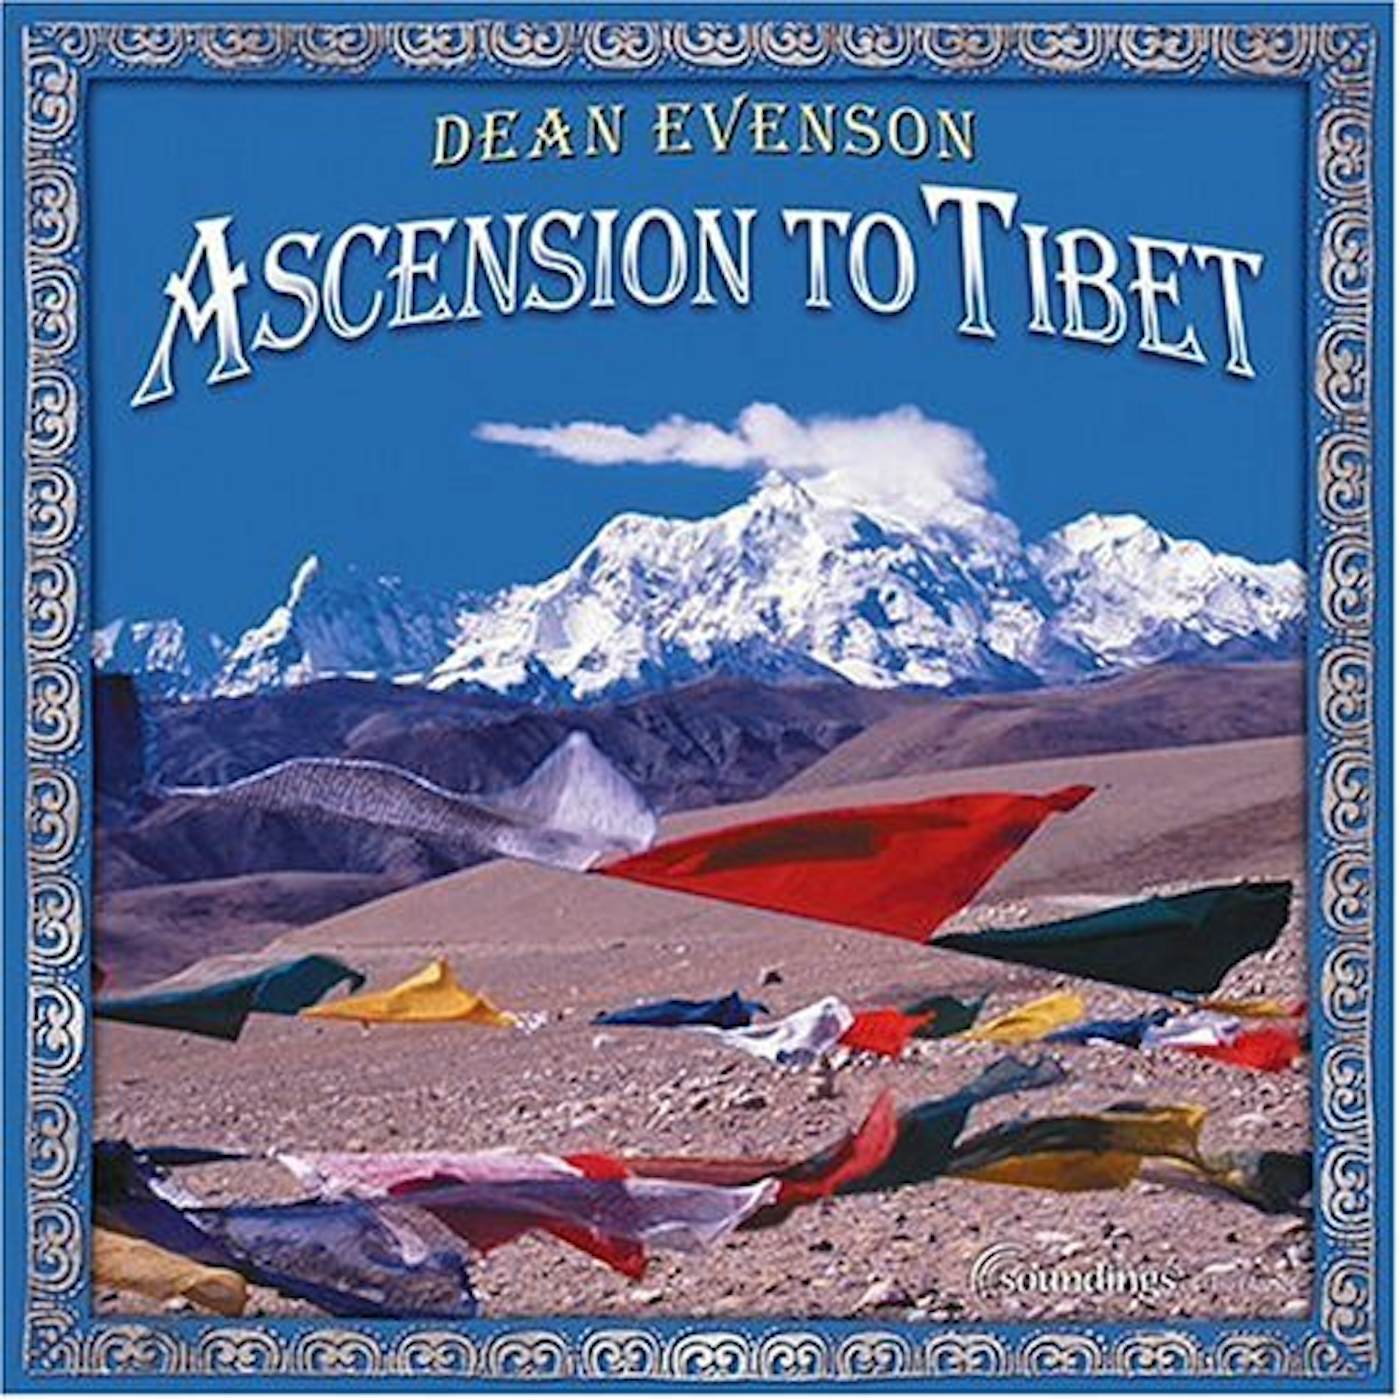 Dean Evenson ASCENSION TO TIBET CD